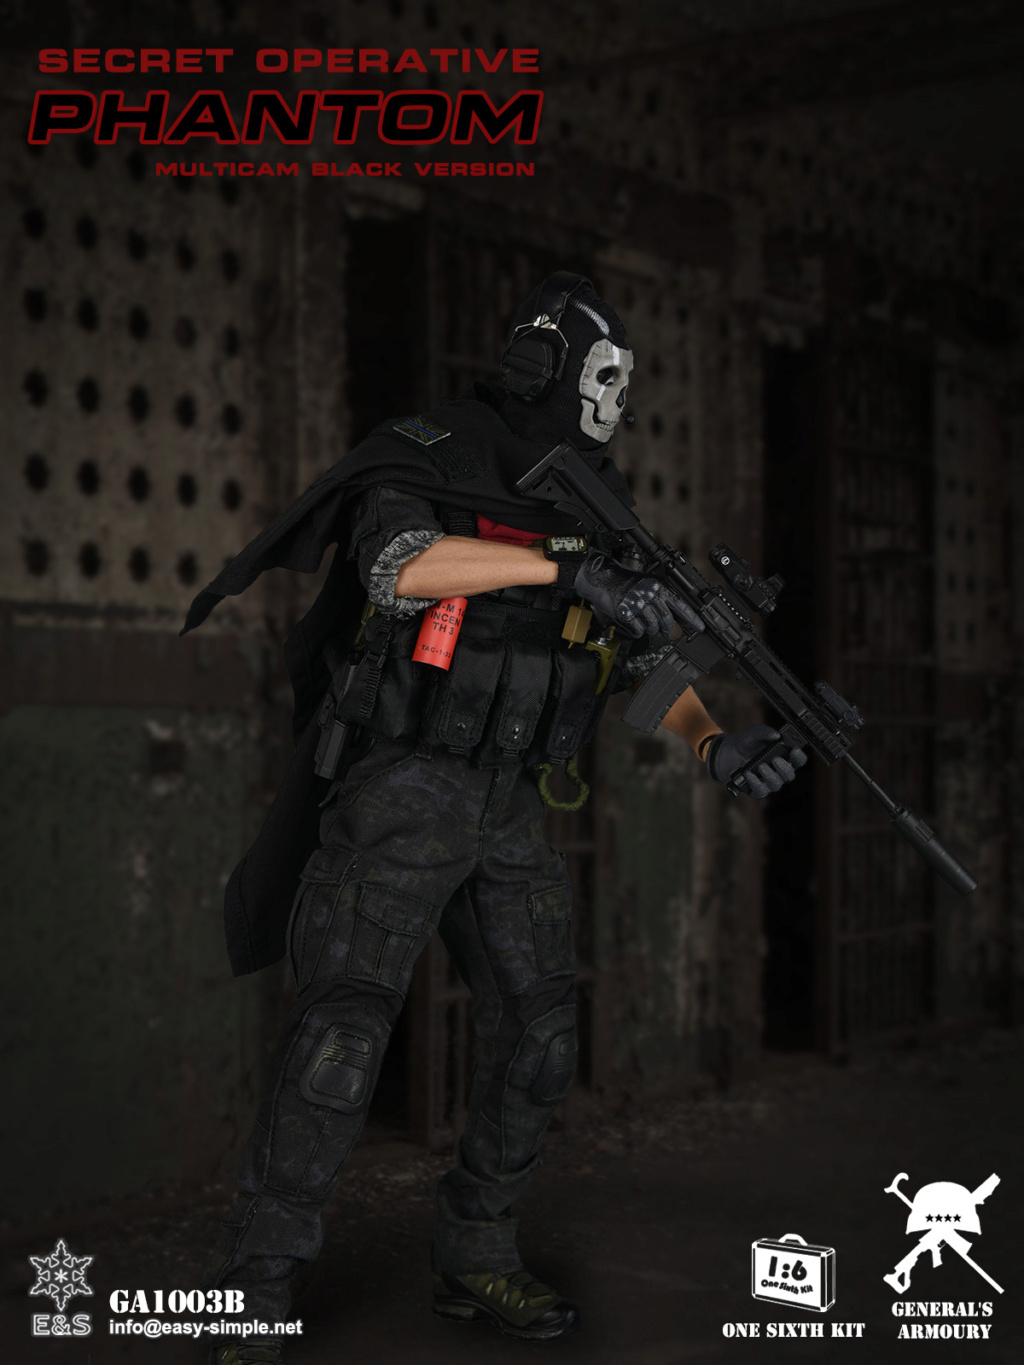 videogame-based - NEW PRODUCT: General's Armoury: GA1003B Secret Operative Phantom (Multicam Black) Limited 200 Units Worldwide 11012311